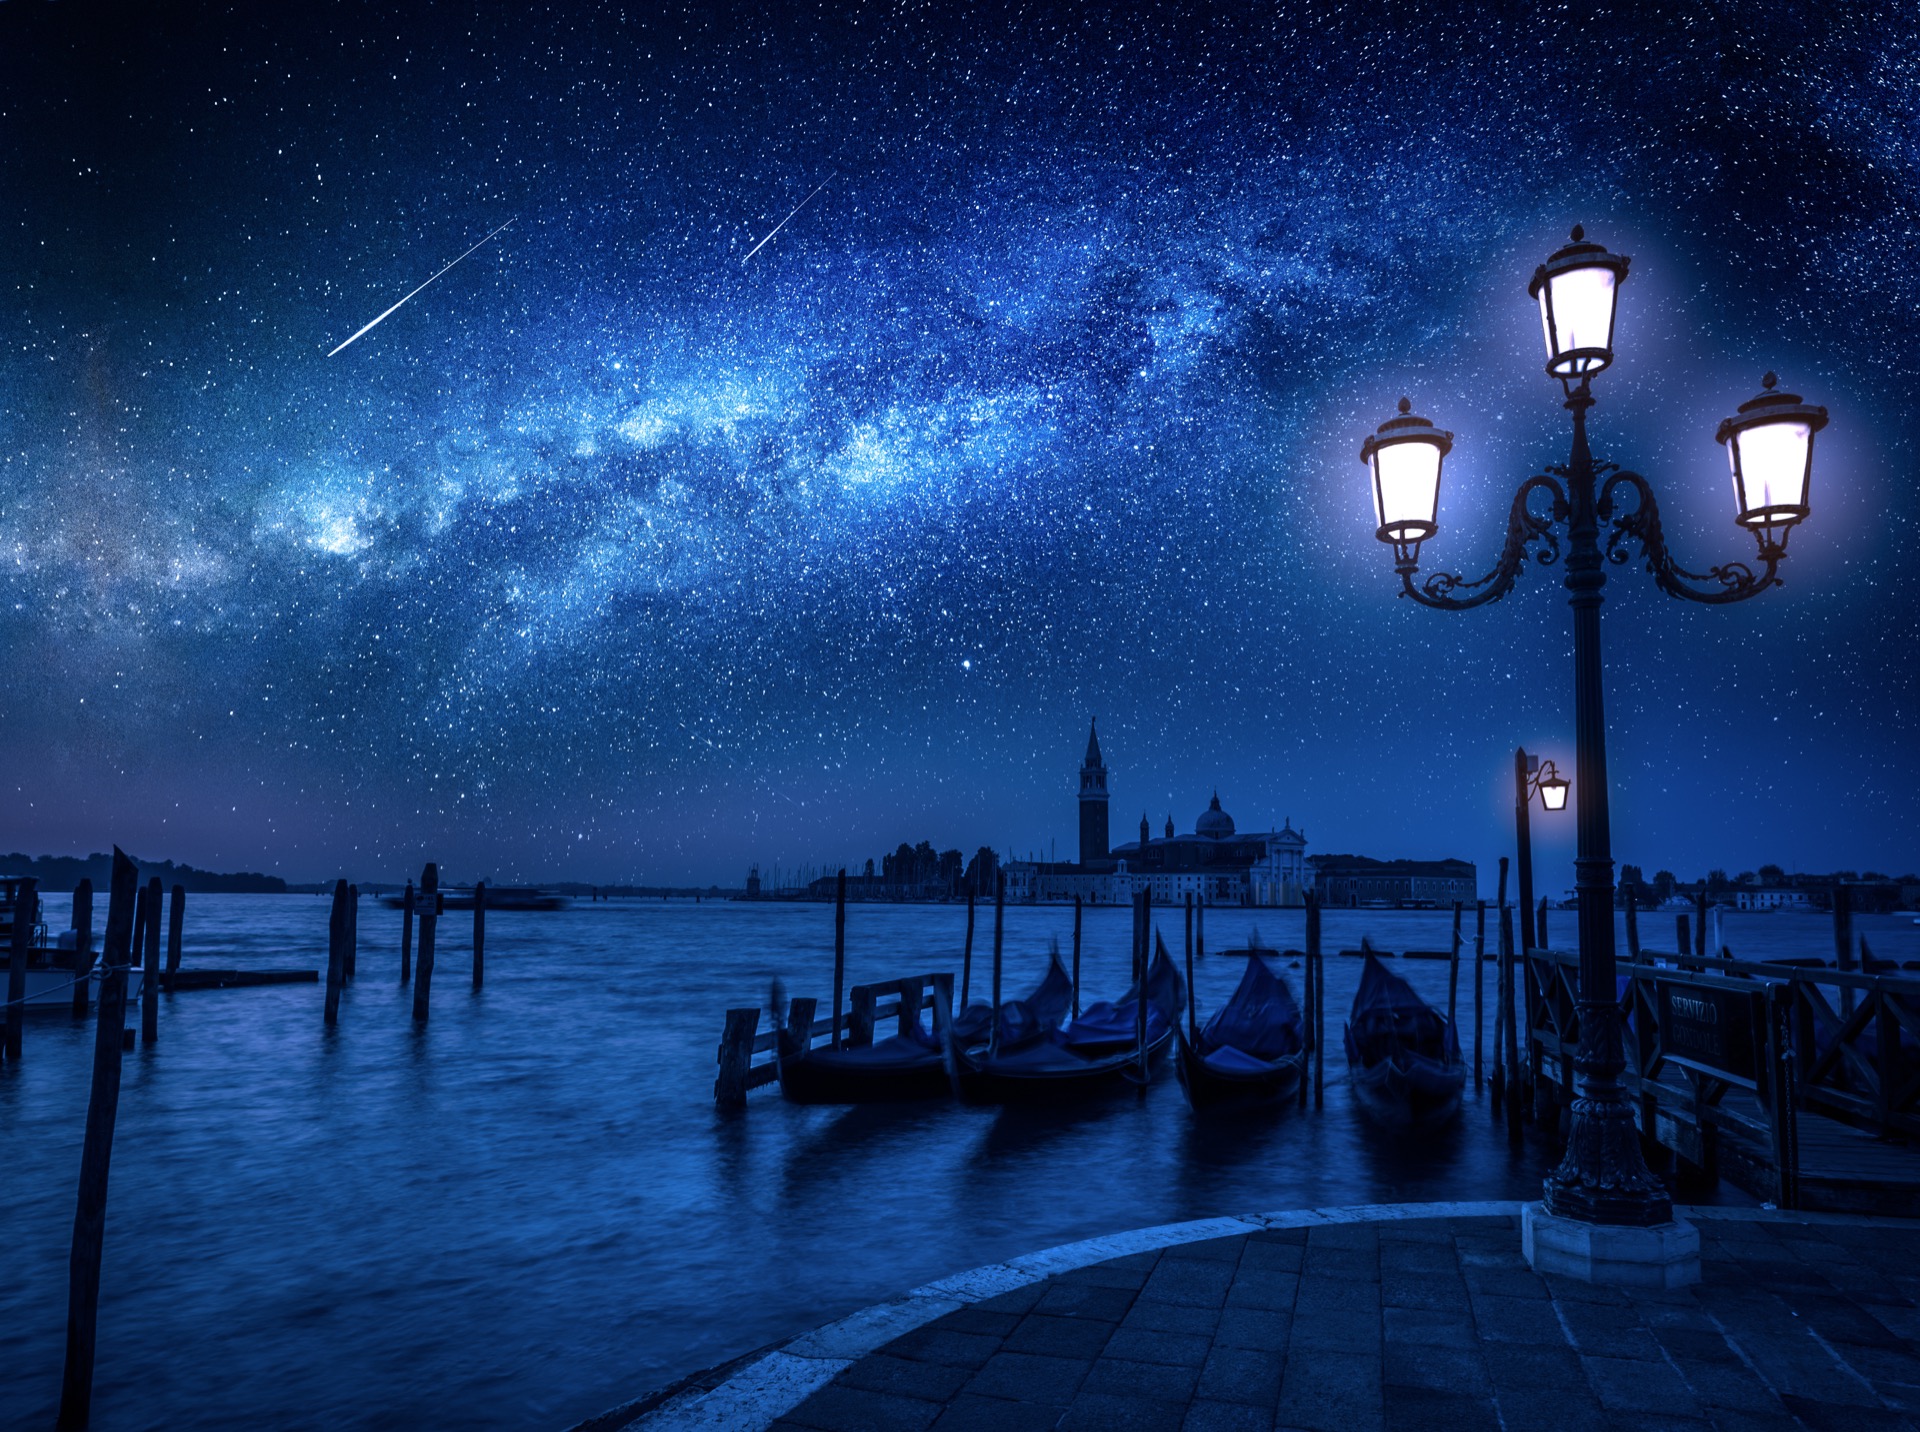 Venise, le Grand canal, la nuit. © shaiith, Adobe Stock